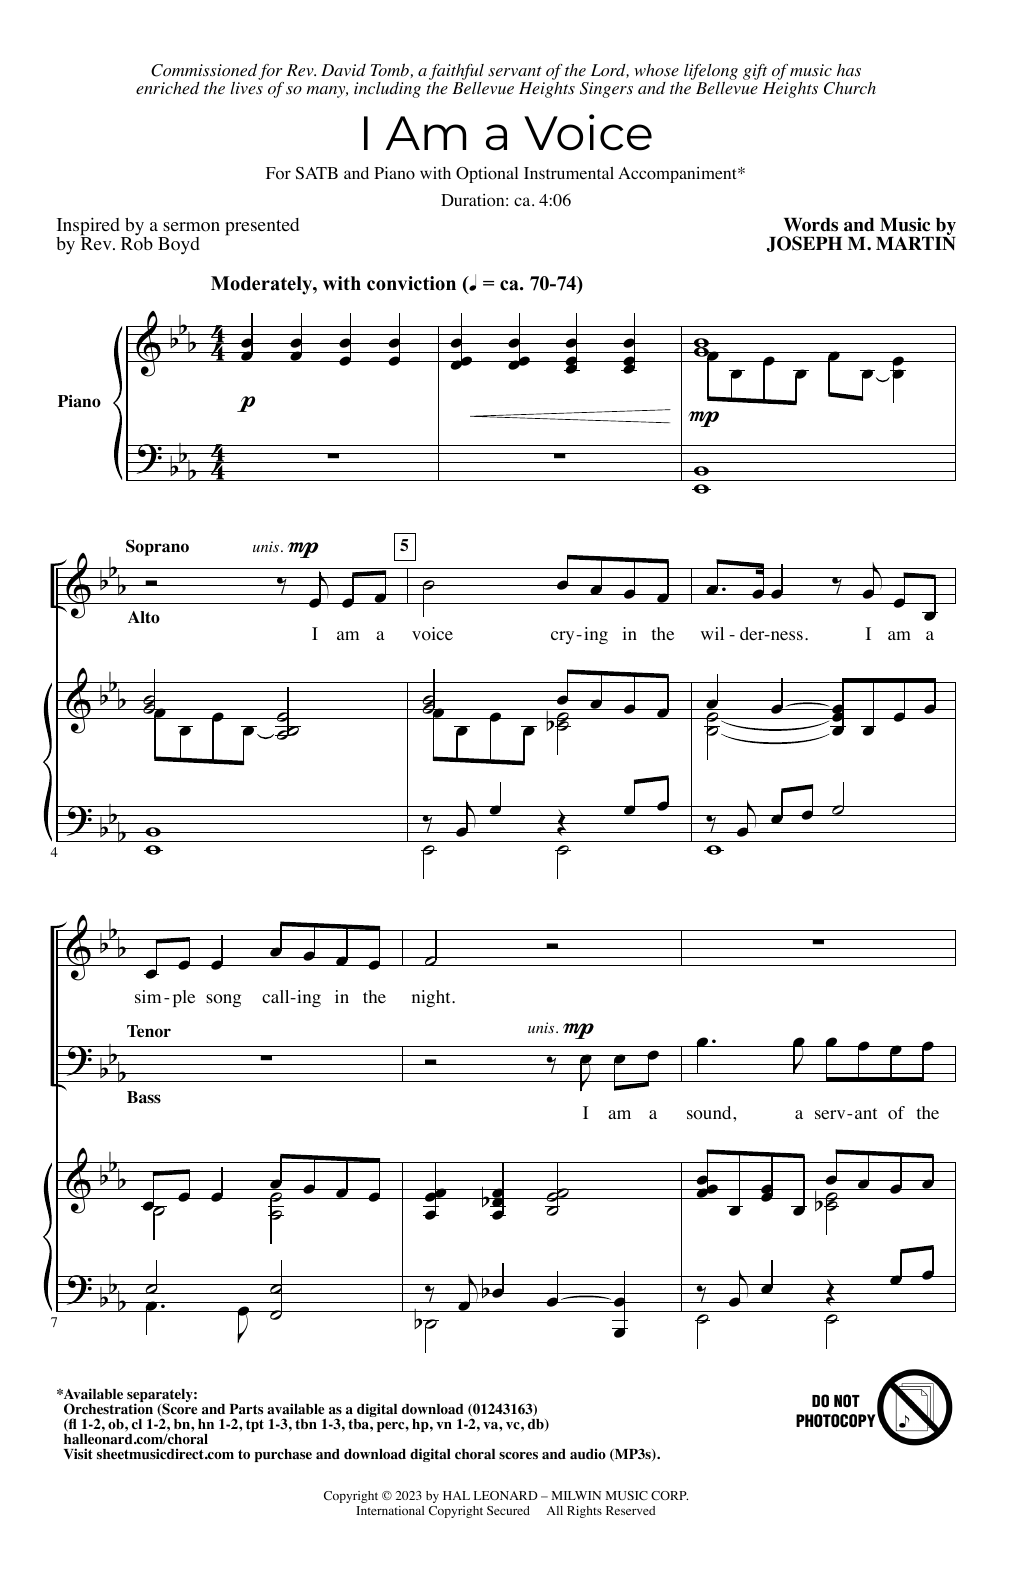 Joseph M. Martin I Am A Voice Sheet Music Notes & Chords for SATB Choir - Download or Print PDF